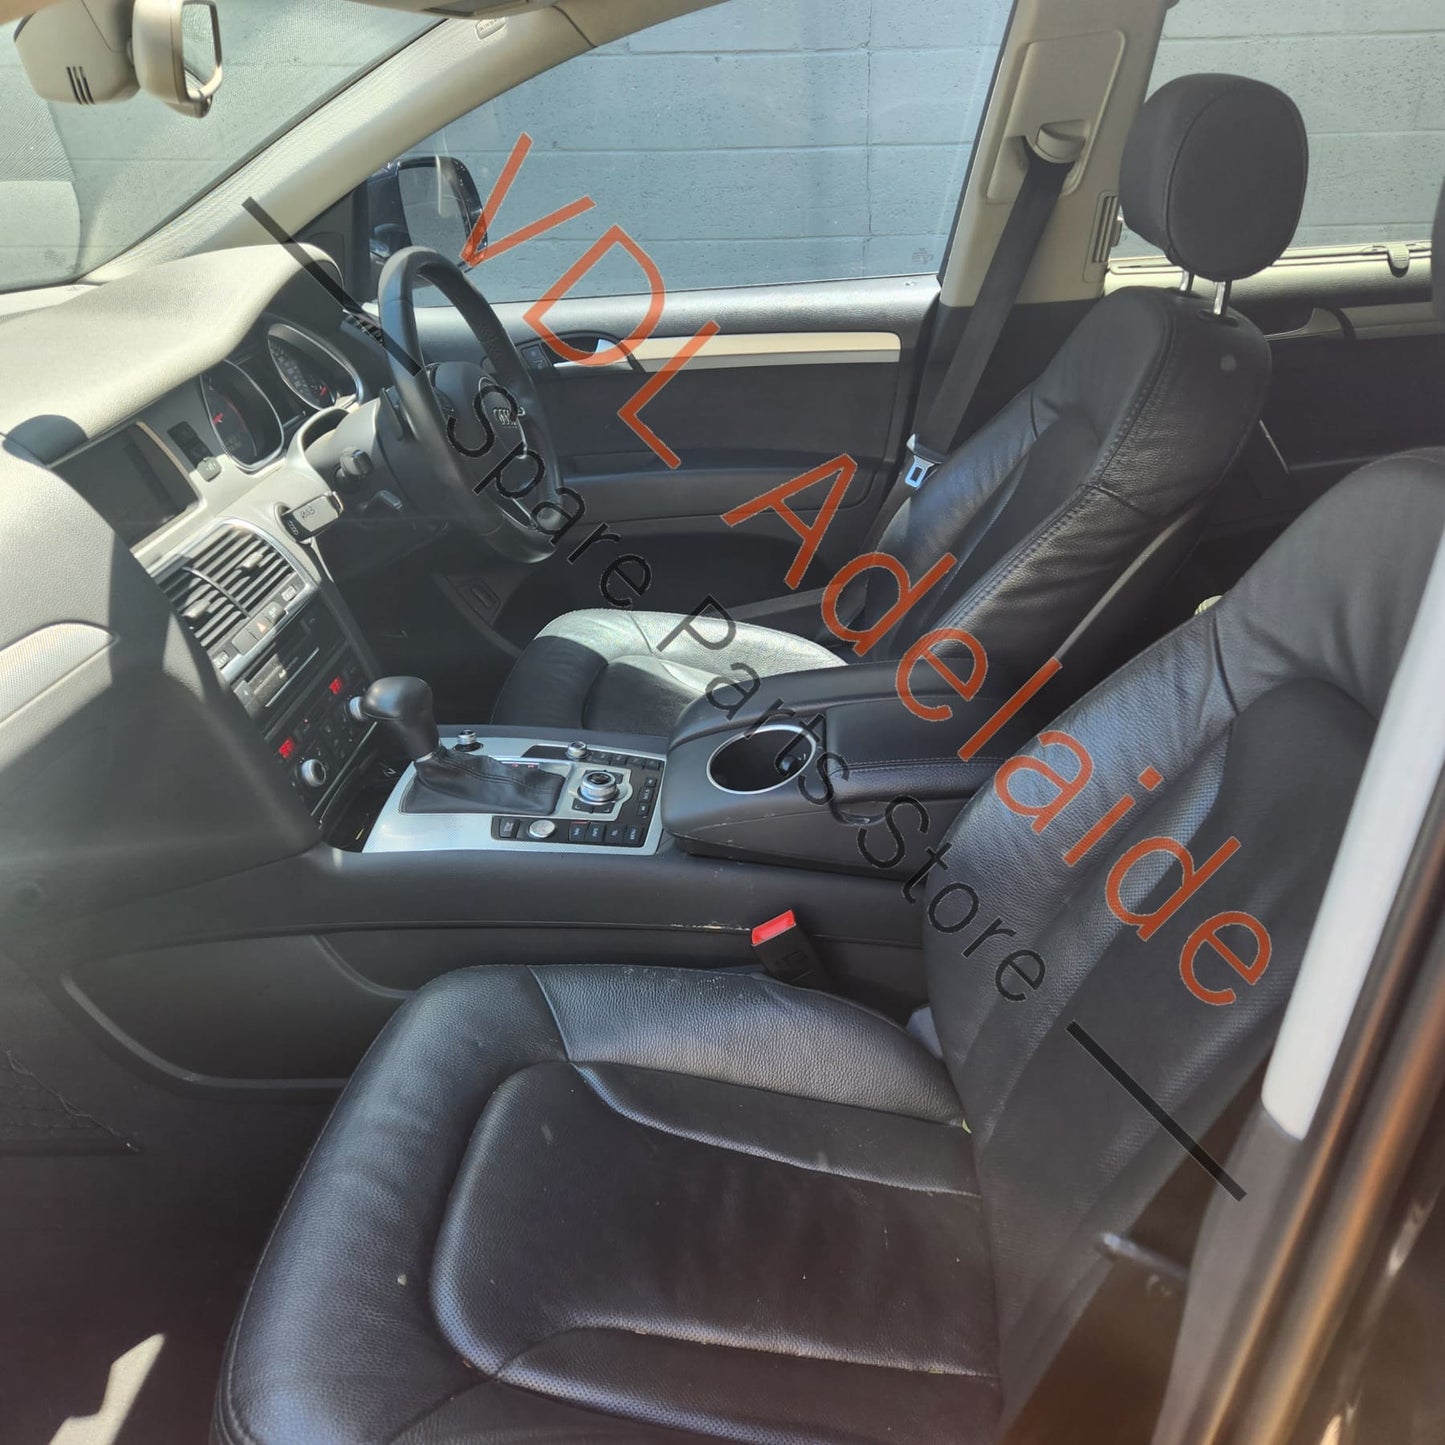 4L2853189 4L2853189C   Audi Q7 Dashboard Trim Insert Above Glovebox 4L2853189 Aluminium 'Trigon'